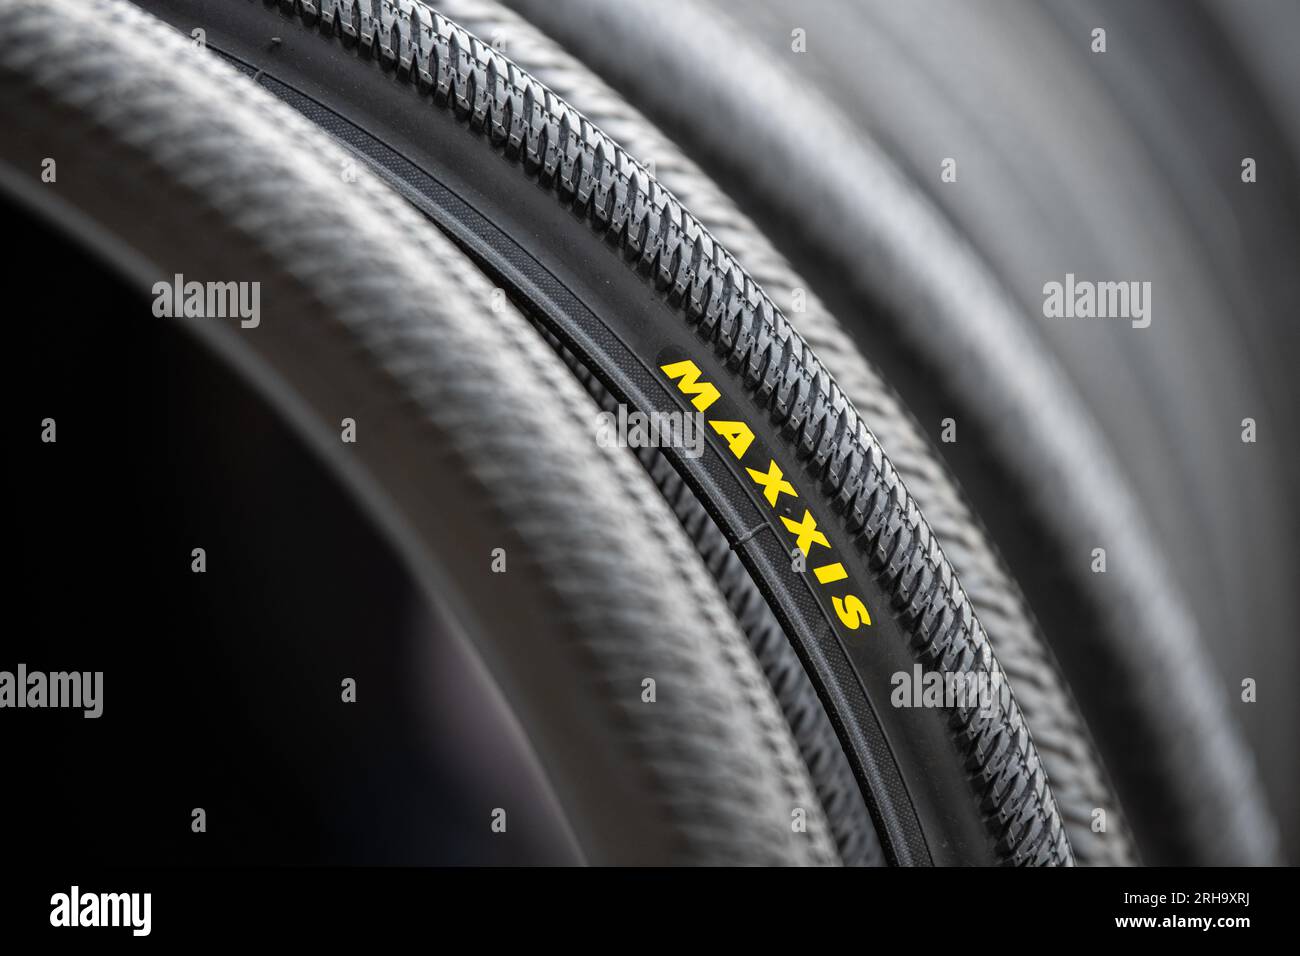 Maxxis BMX bike tyres Stock Photo